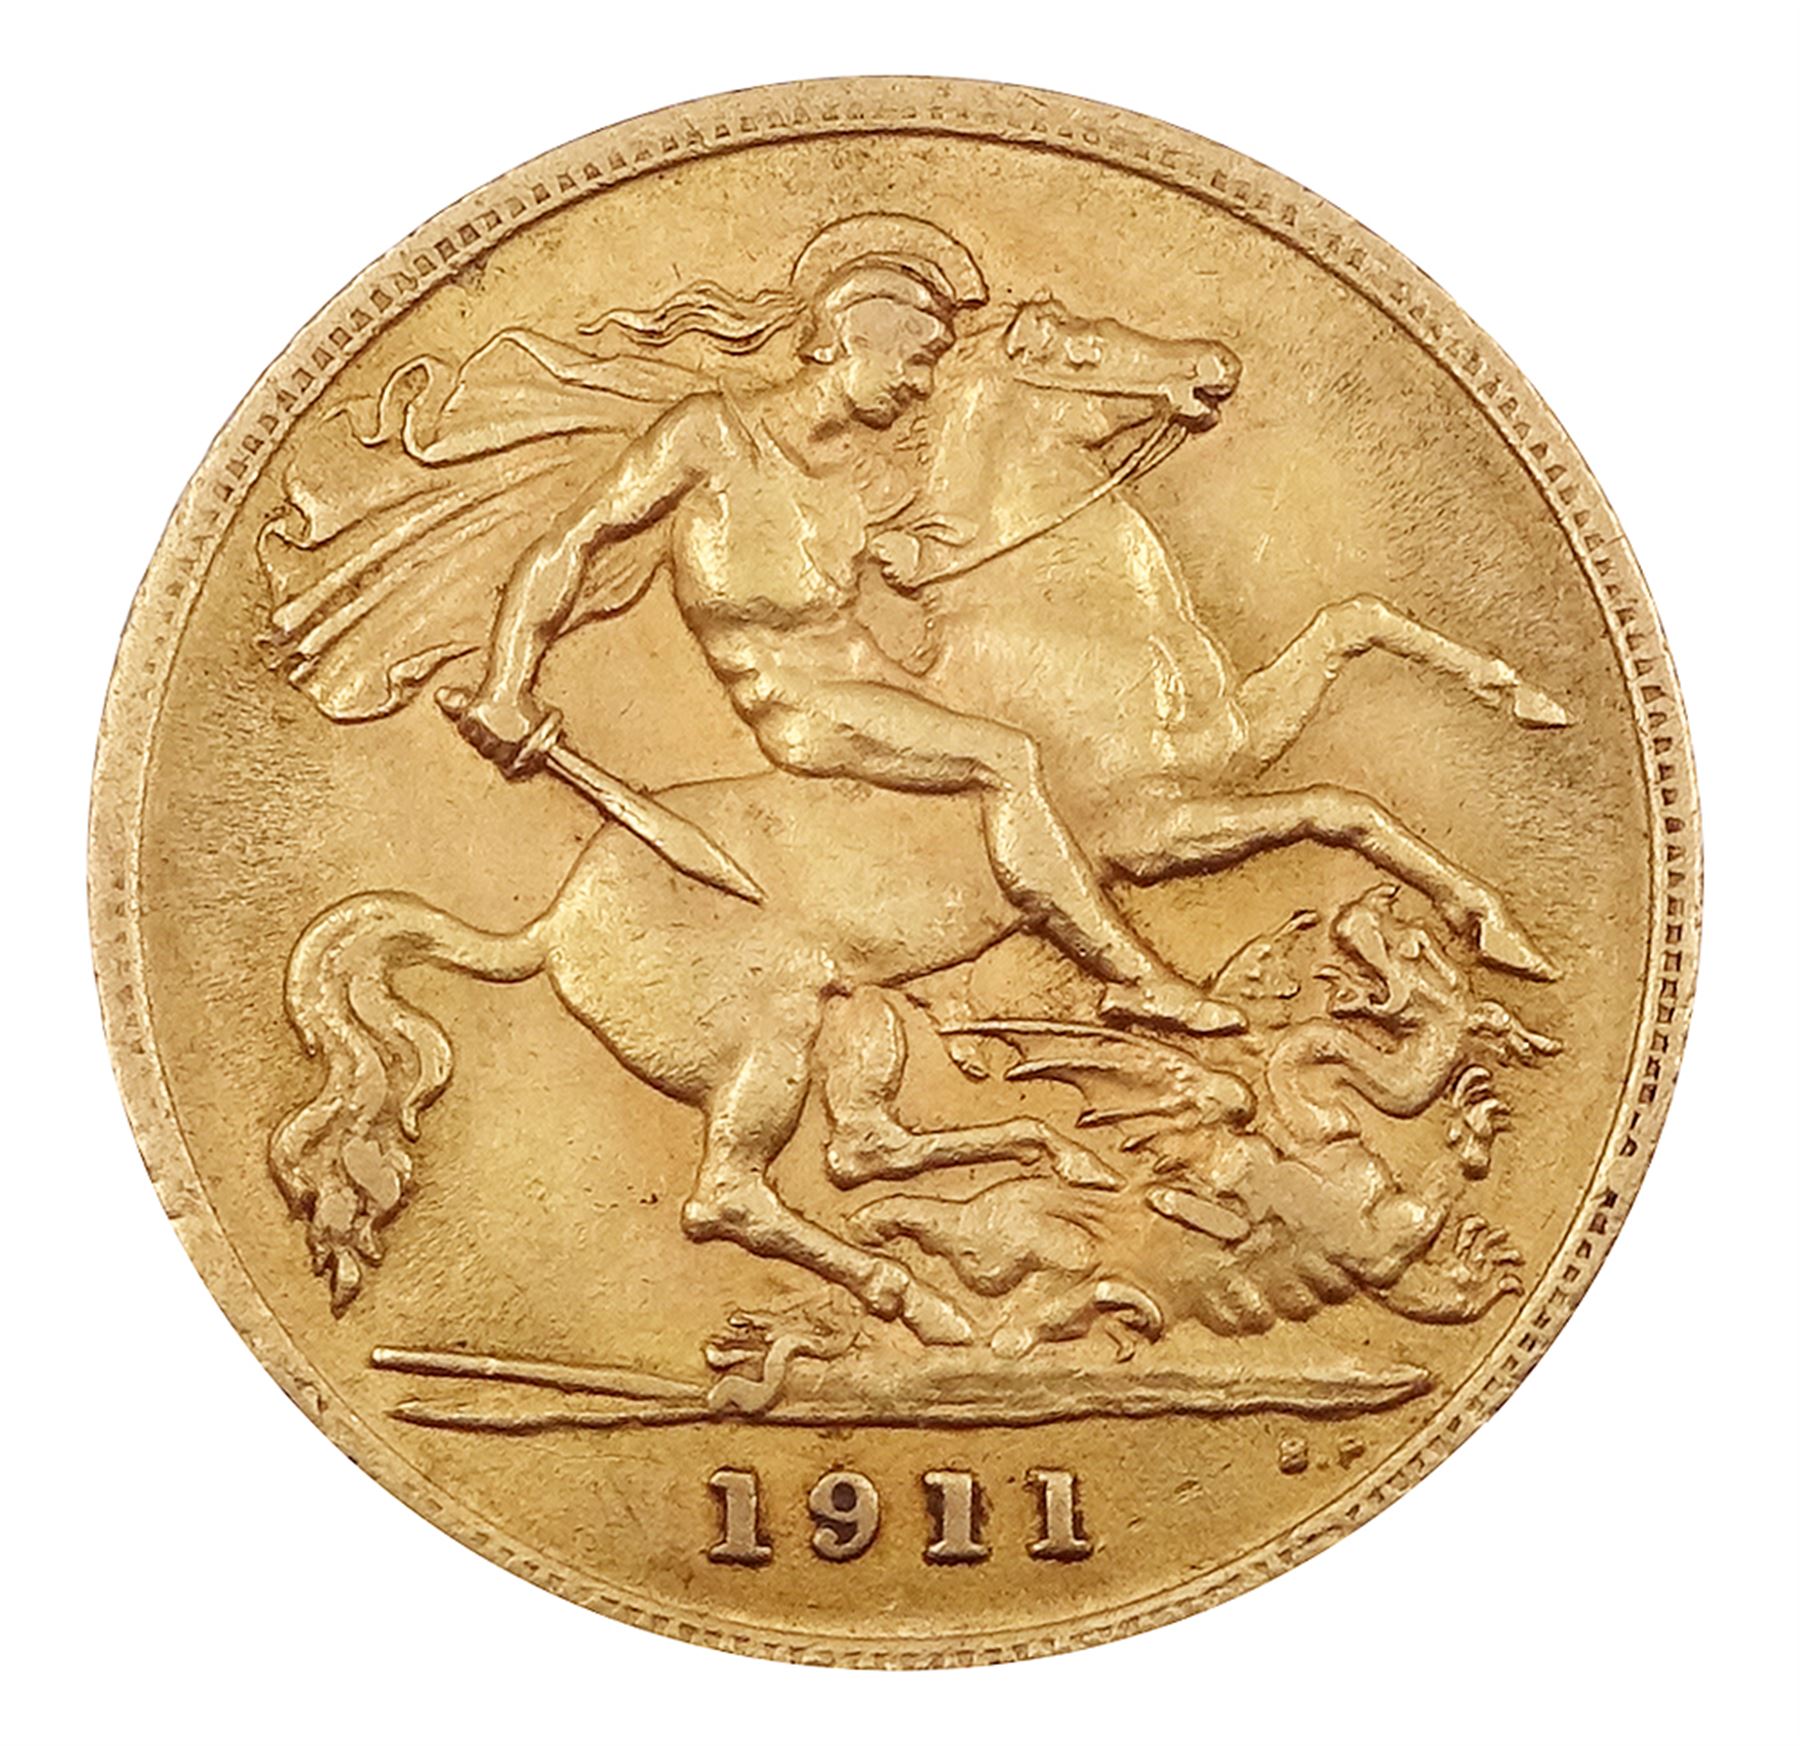 King George V 1911 gold half sovereign coin - Image 2 of 2